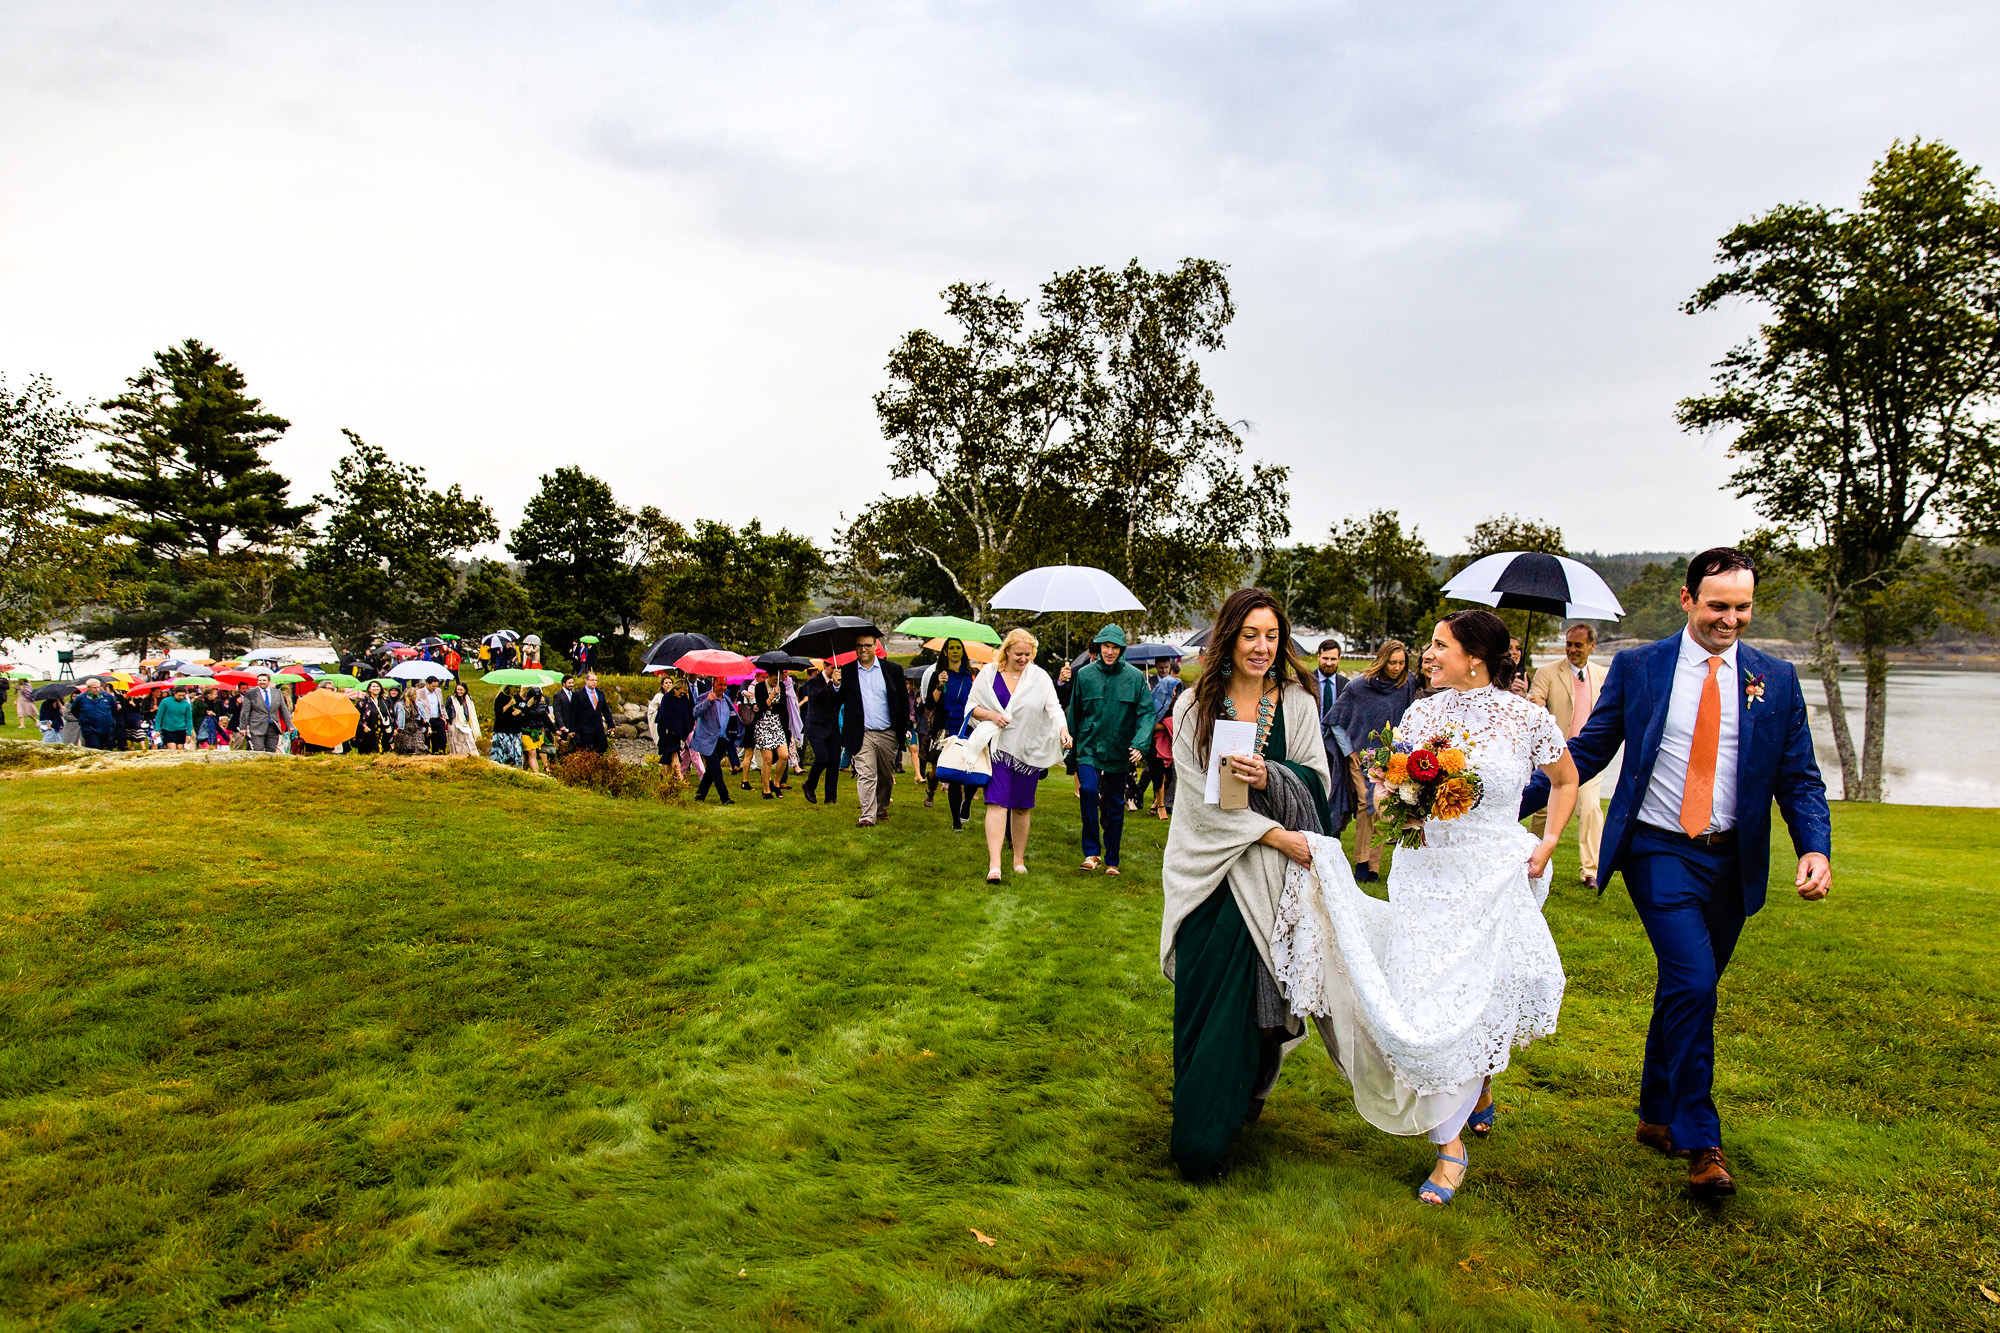 A colorful midcoast Maine rainy wedding